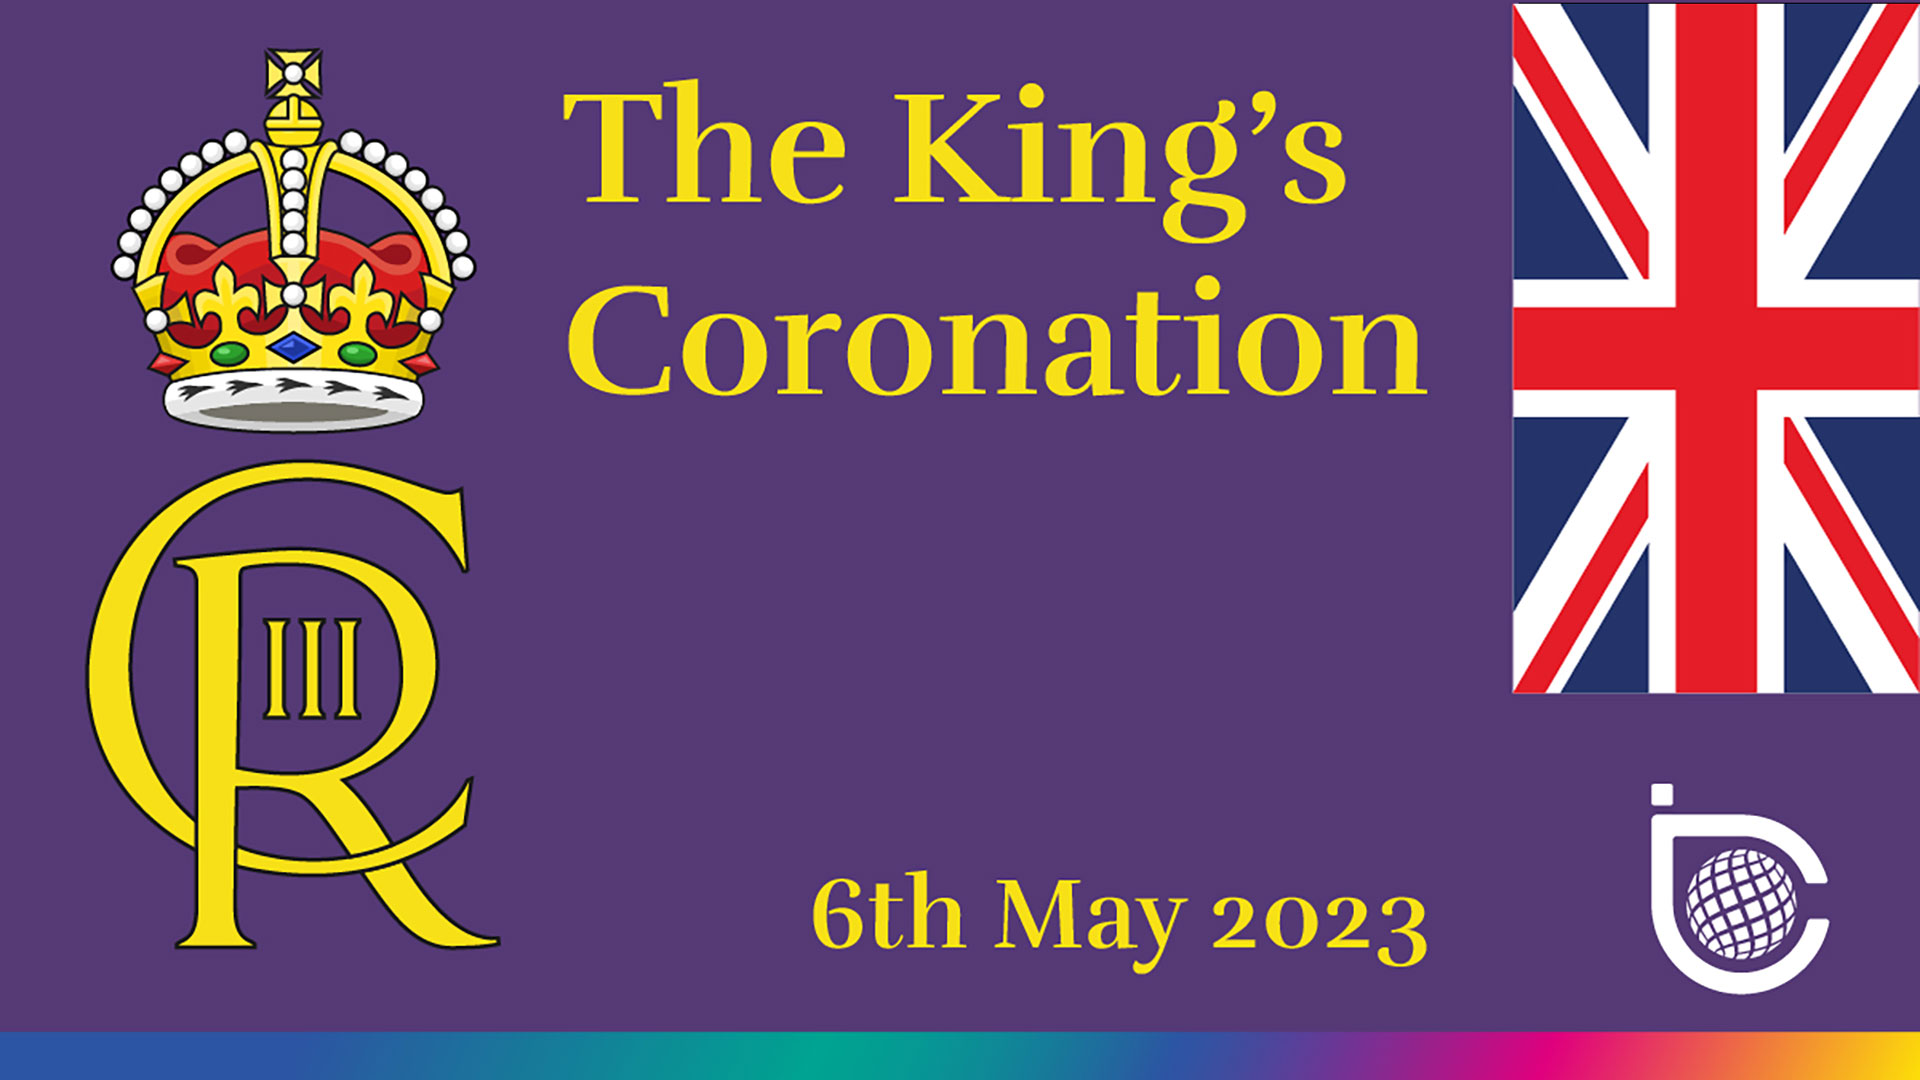 The Coronation Weekend is here!